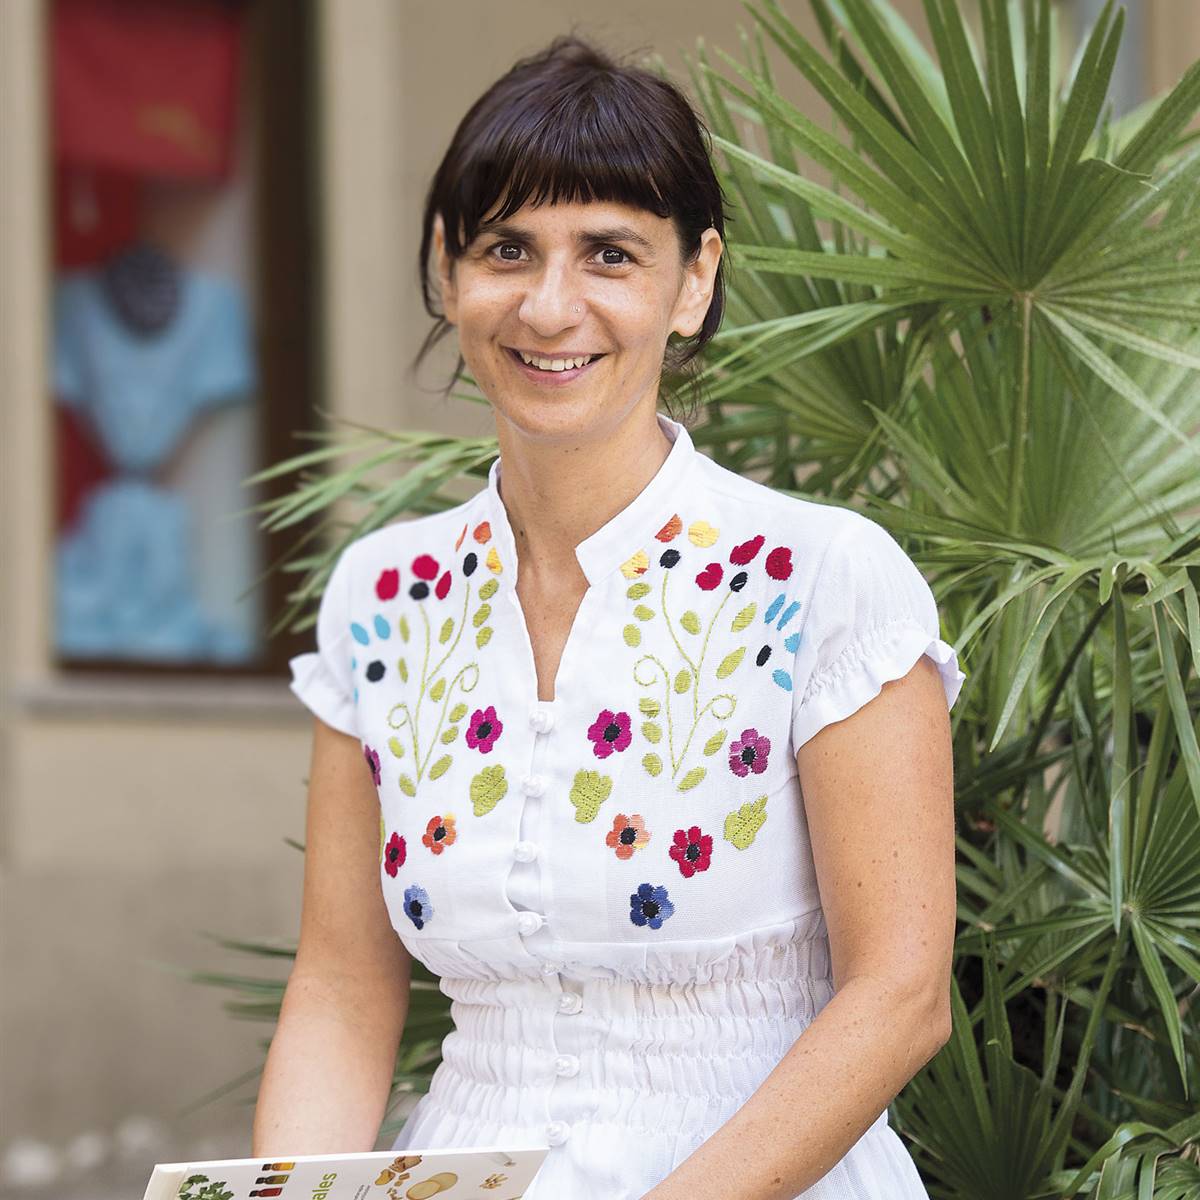 Sofia Loureiro, naturopata y autora de Guía de remedios naturales para niños